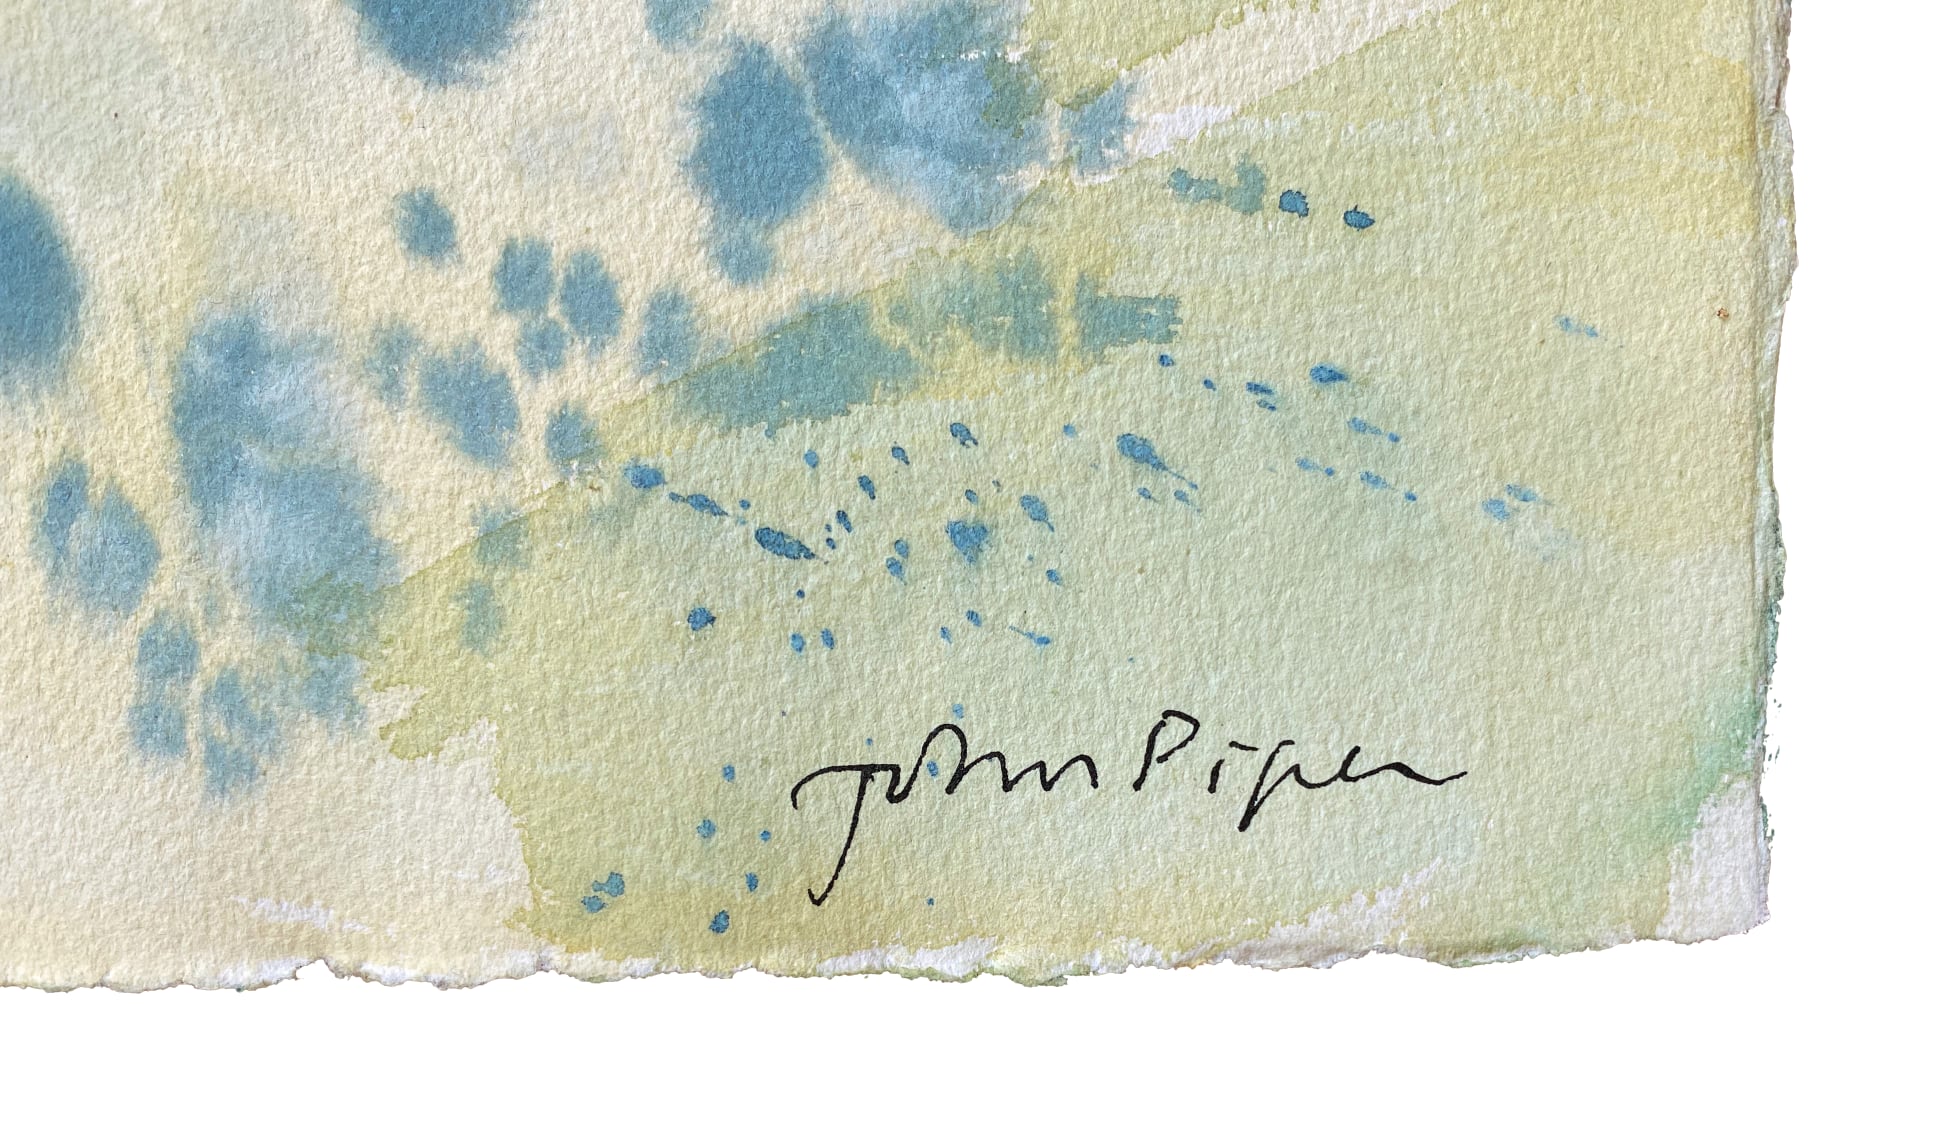 John Piper - St. Brides, Pembrokeshire